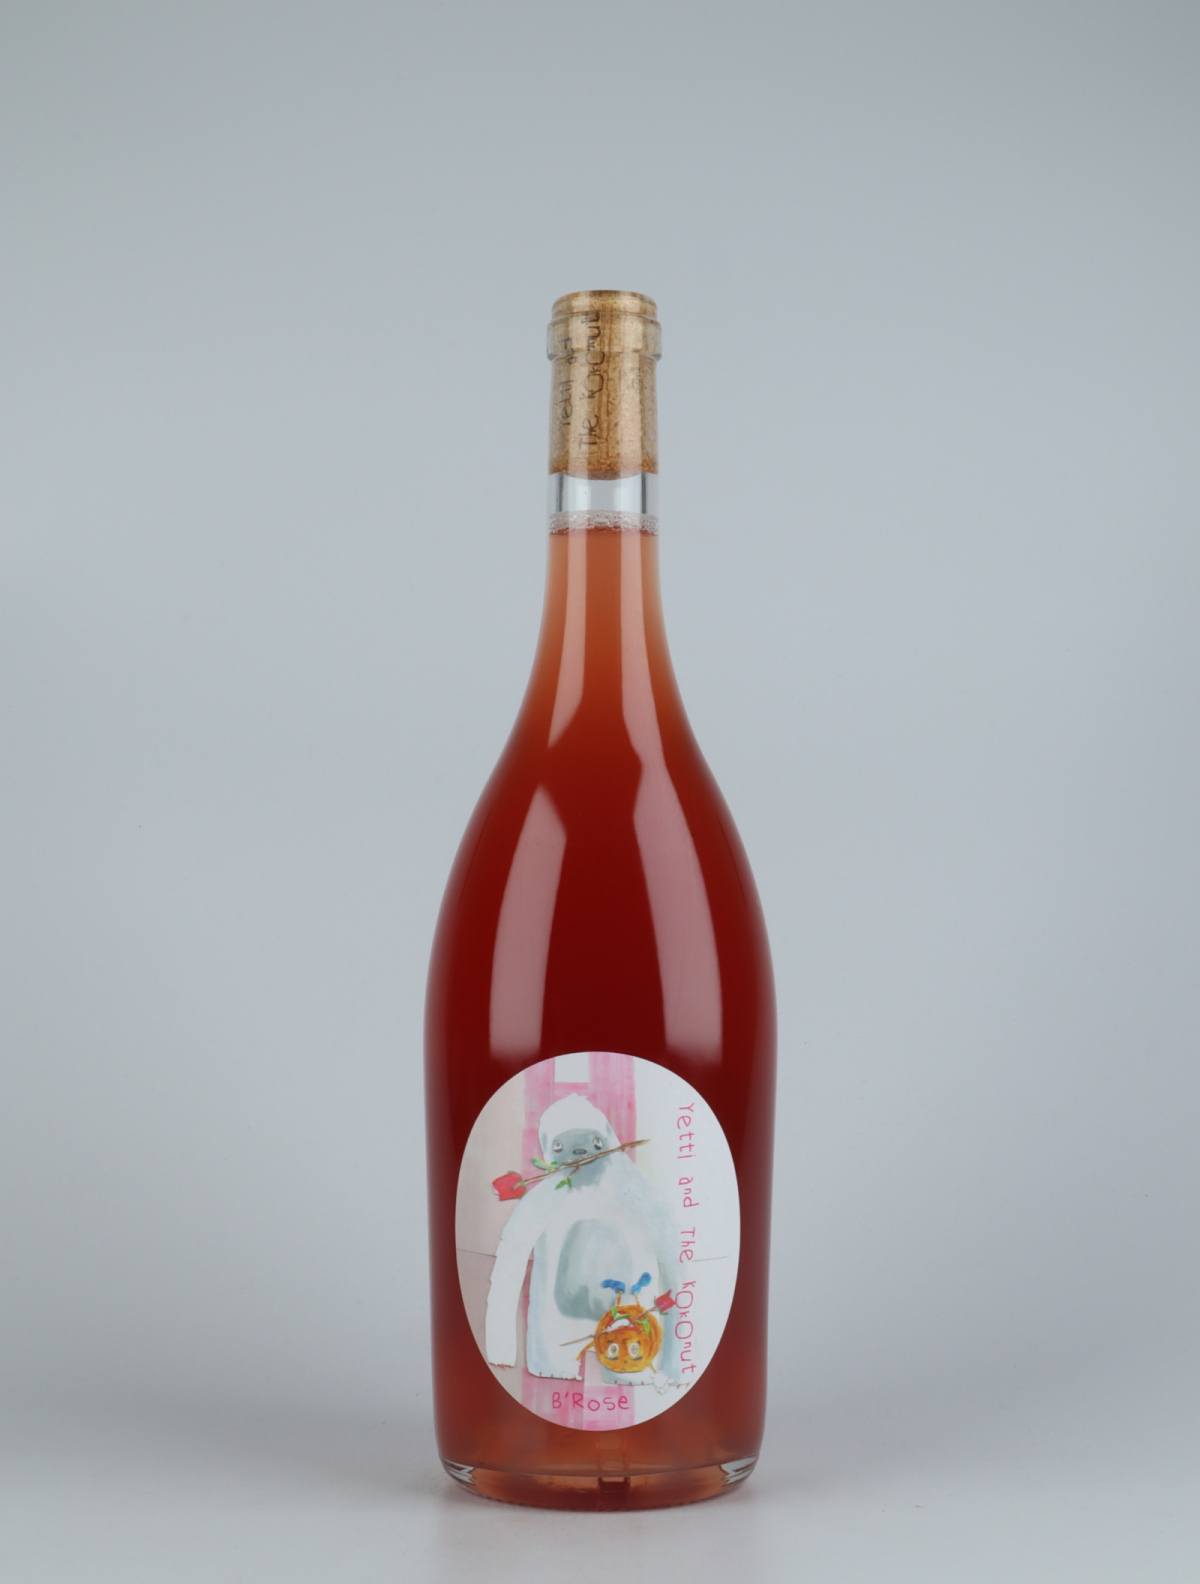 En flaske 2020 B'Rose Rosé fra Yetti and the Kokonut, Barossa Valley i Australien